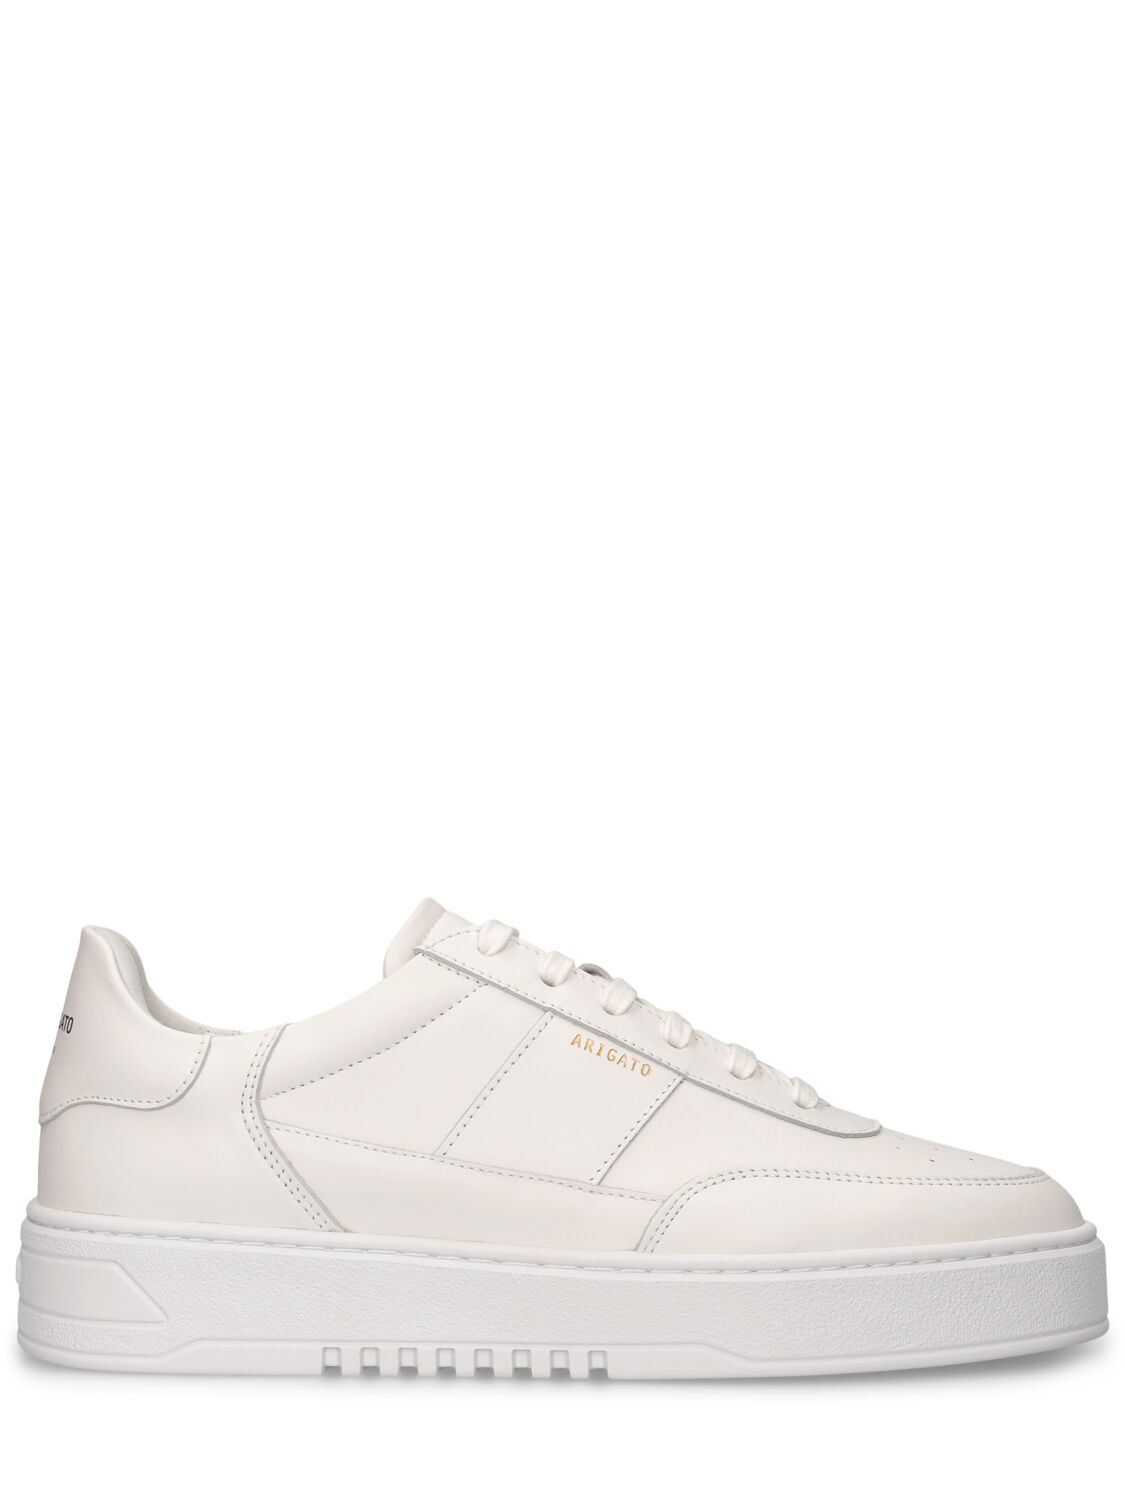 Axel Arigato Orbit Vintage Sneakers In White